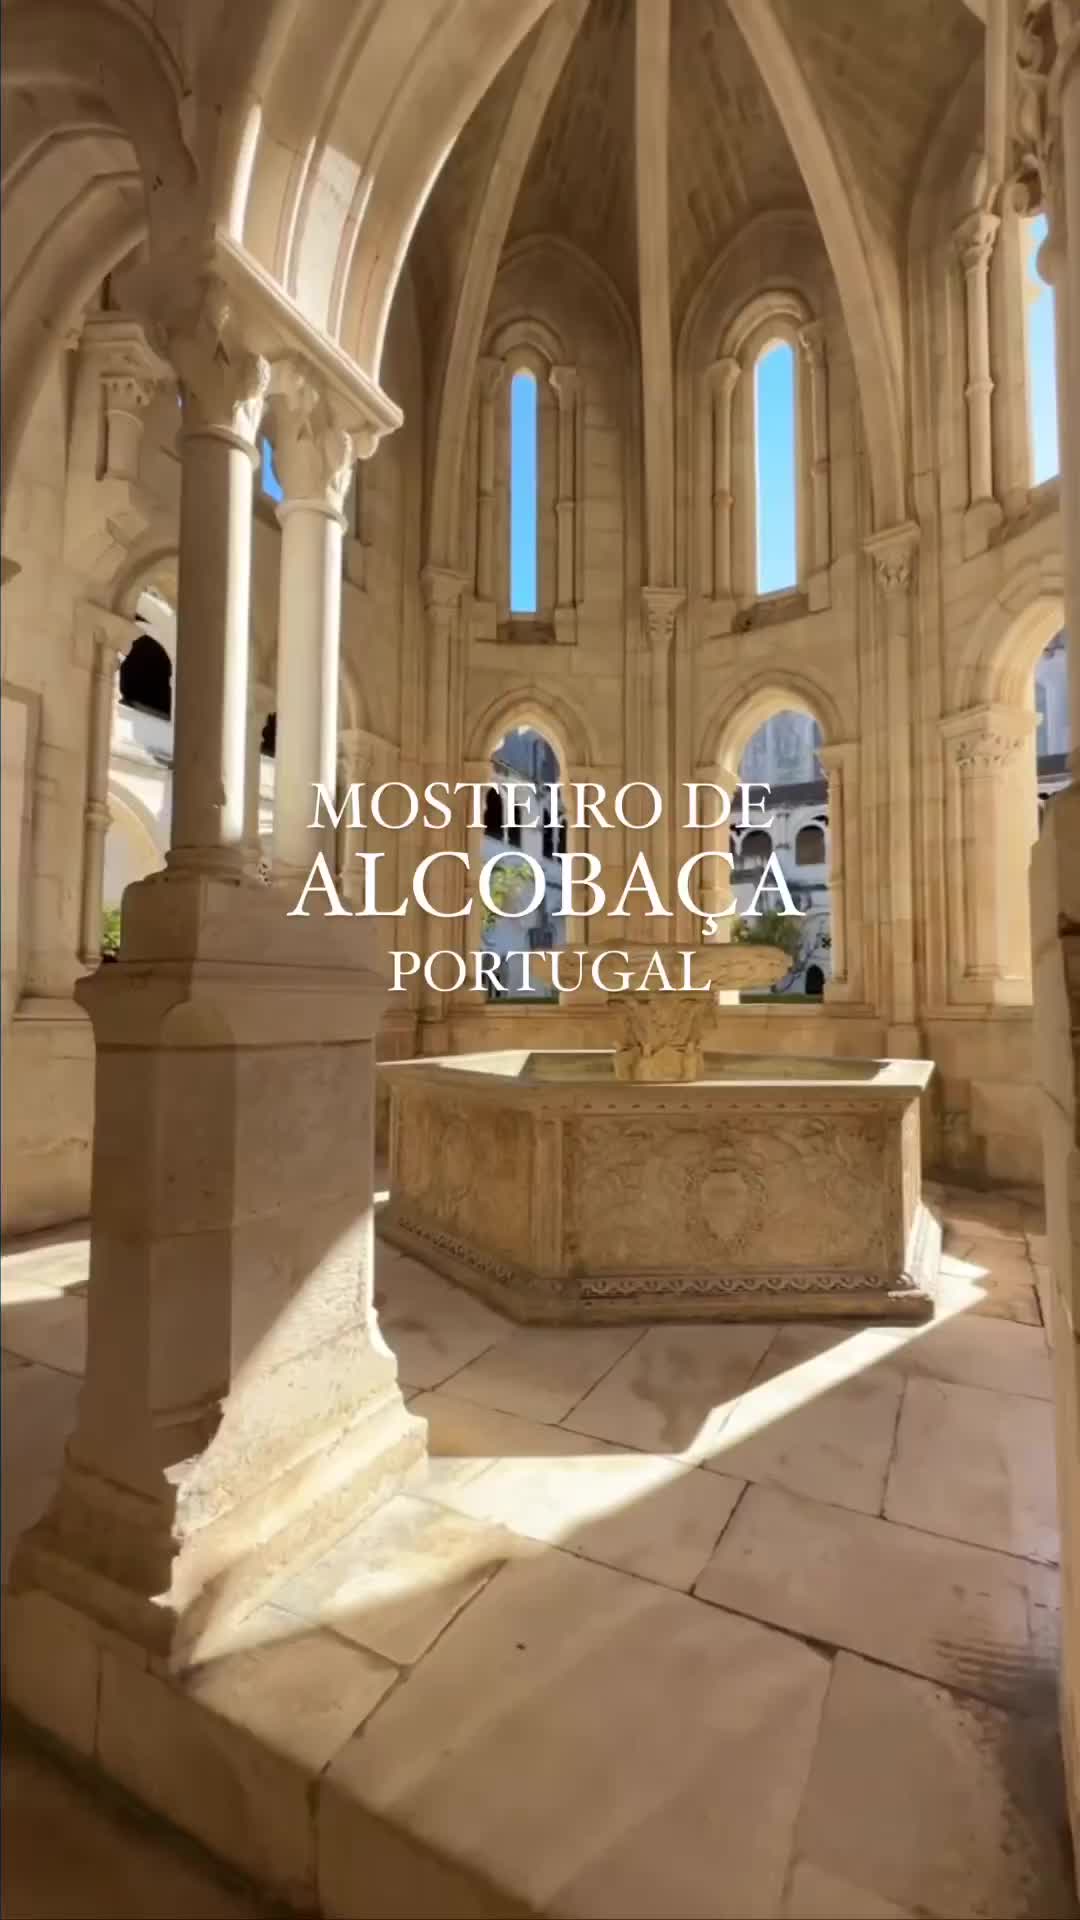 Discover the Monastery of Santa Maria d'Alcobaça